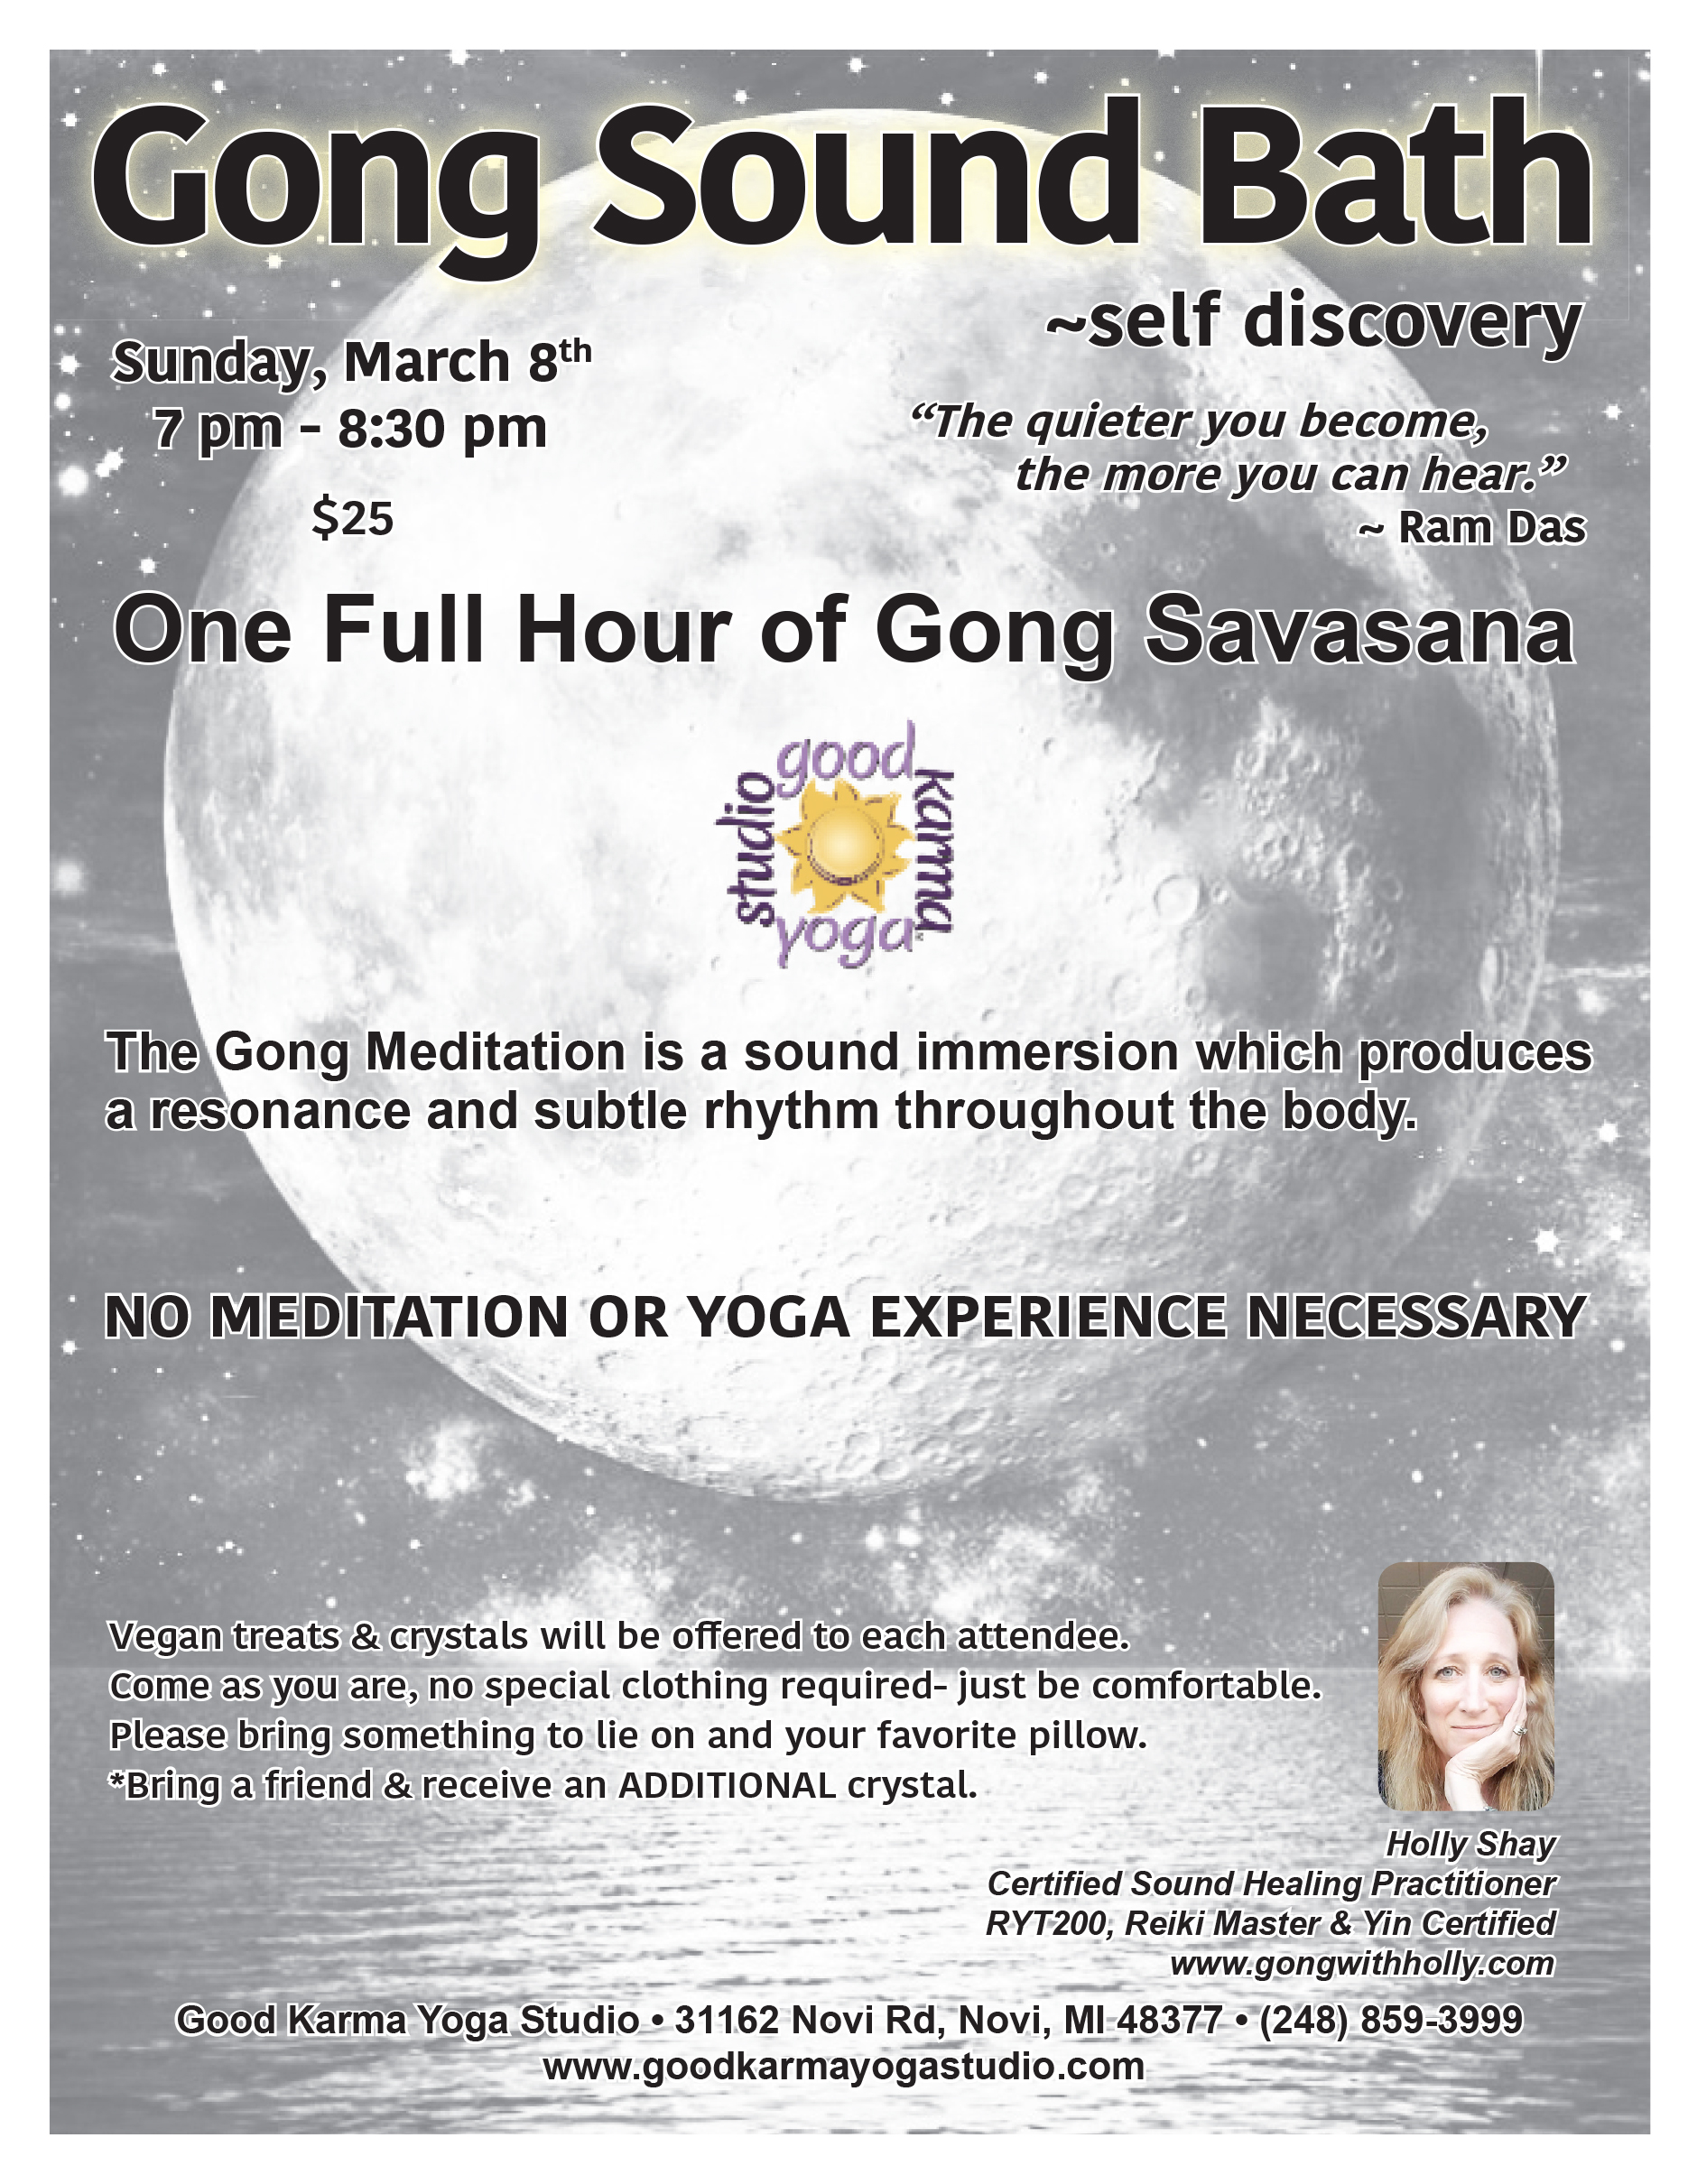 Gong Sound Bath, March 8, Good Karma Yoga Studio, Novi, MI